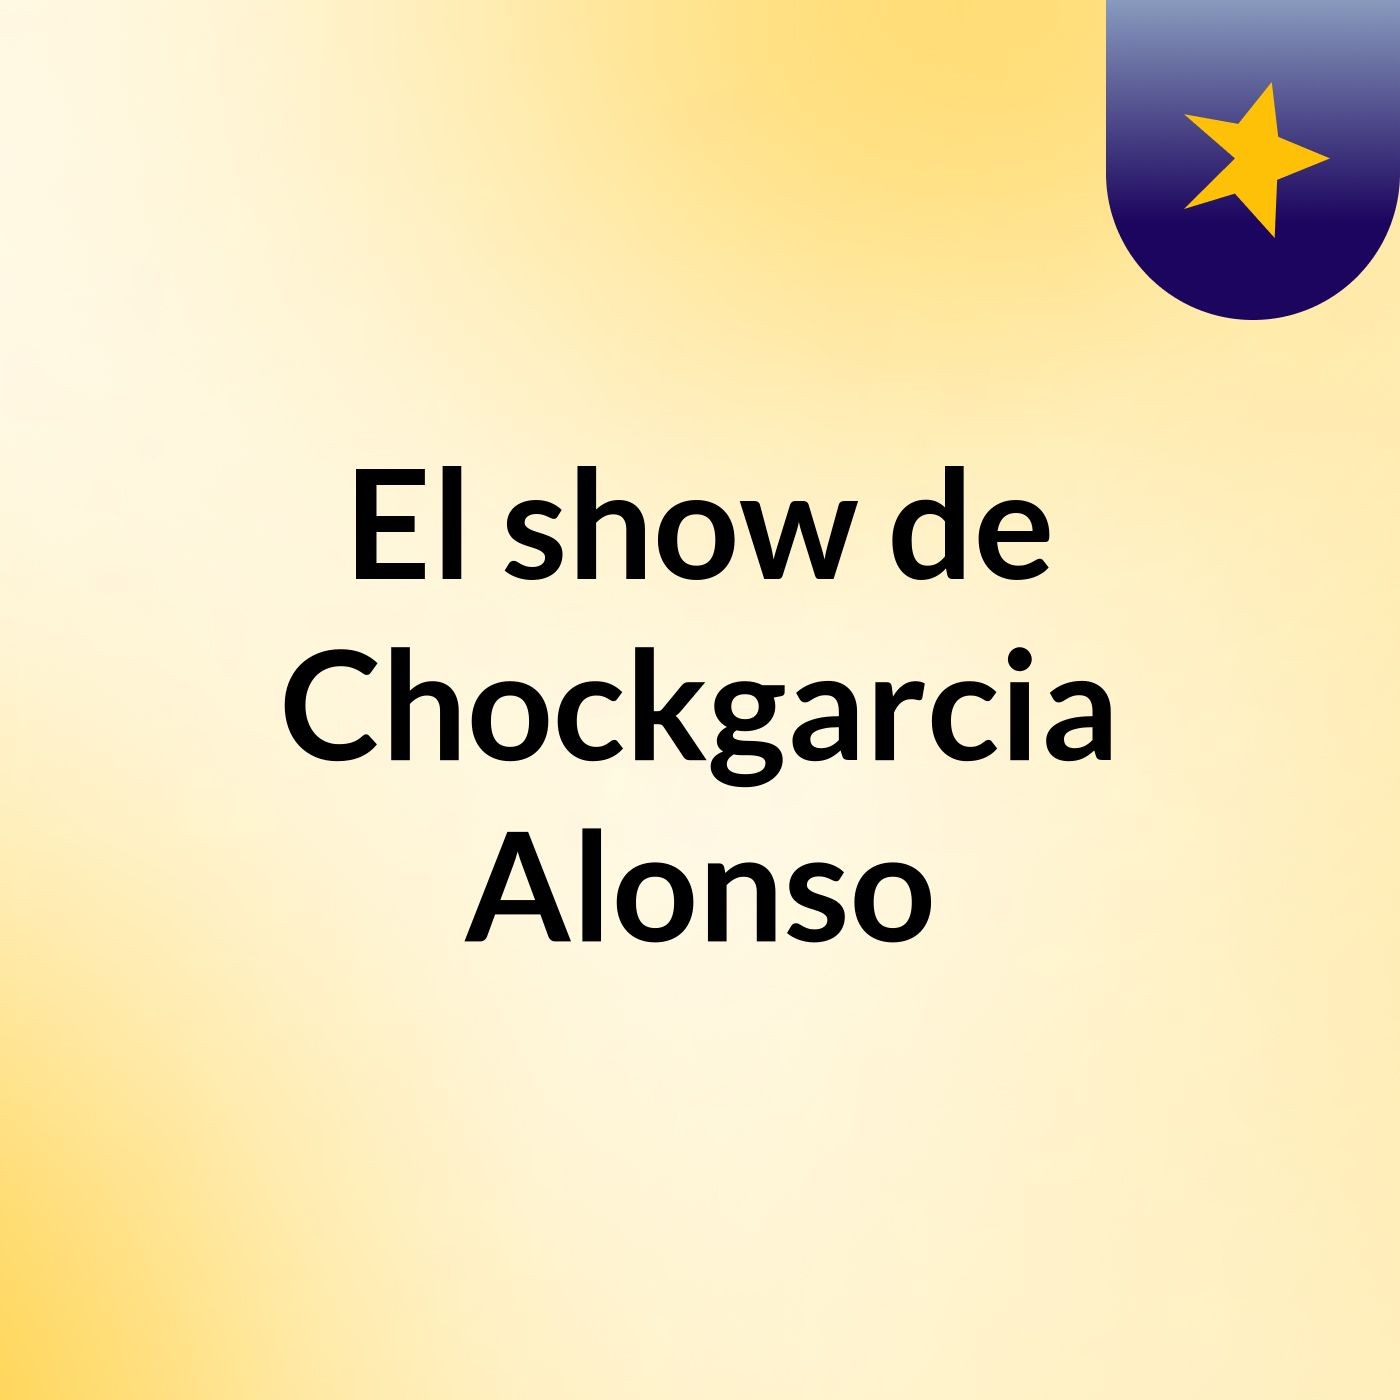 El show de Chockgarcia Alonso